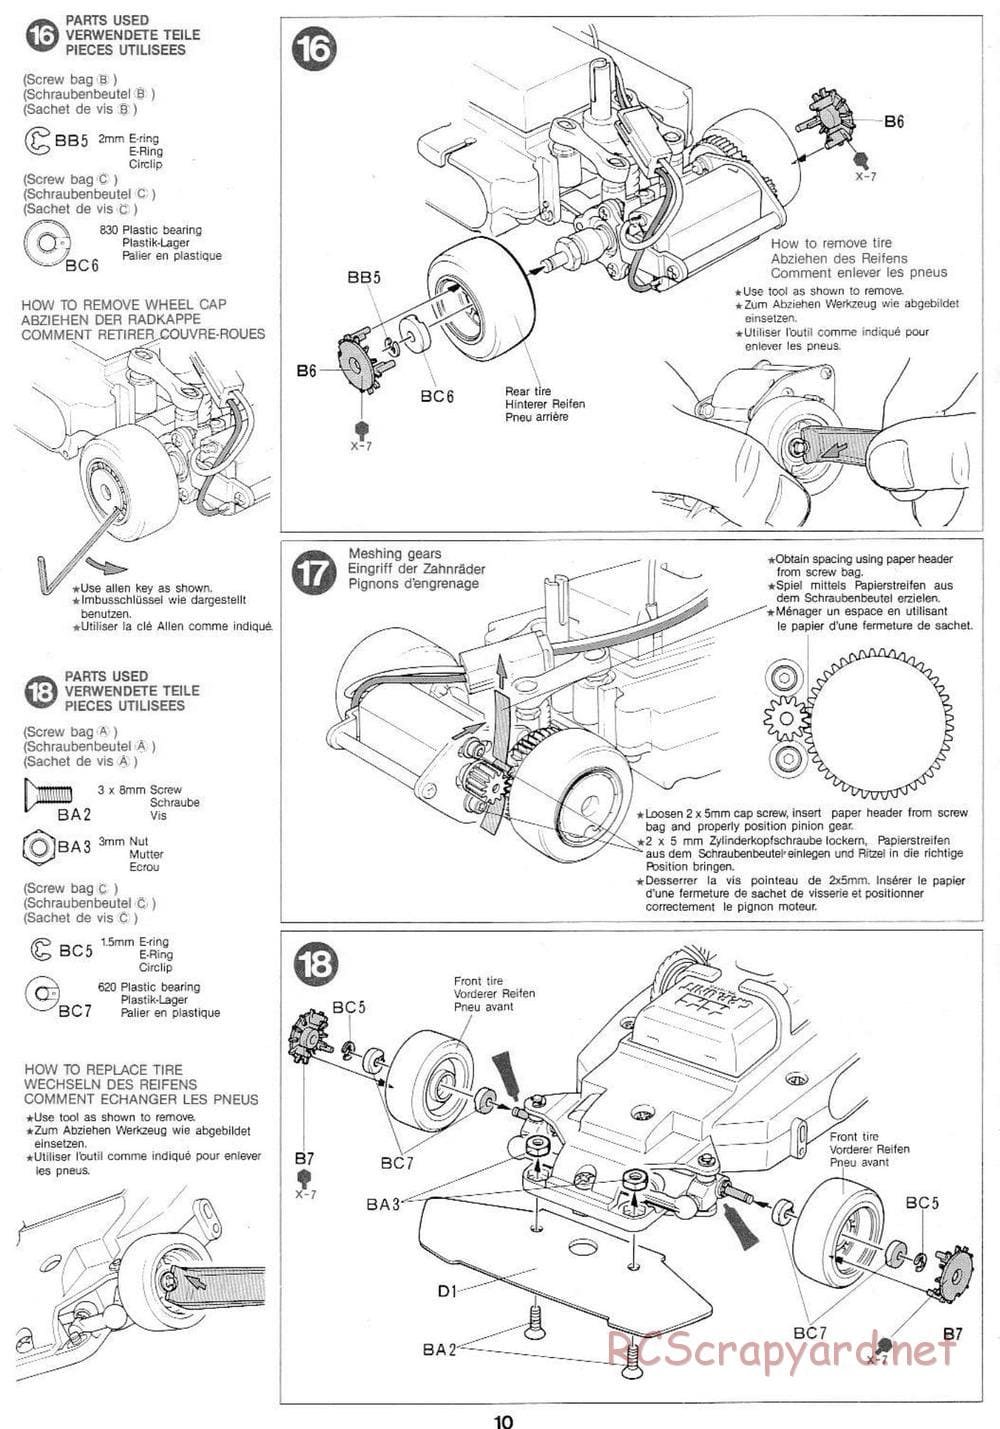 Tamiya - TamTech - On-Road Chassis - Manual - Page 10